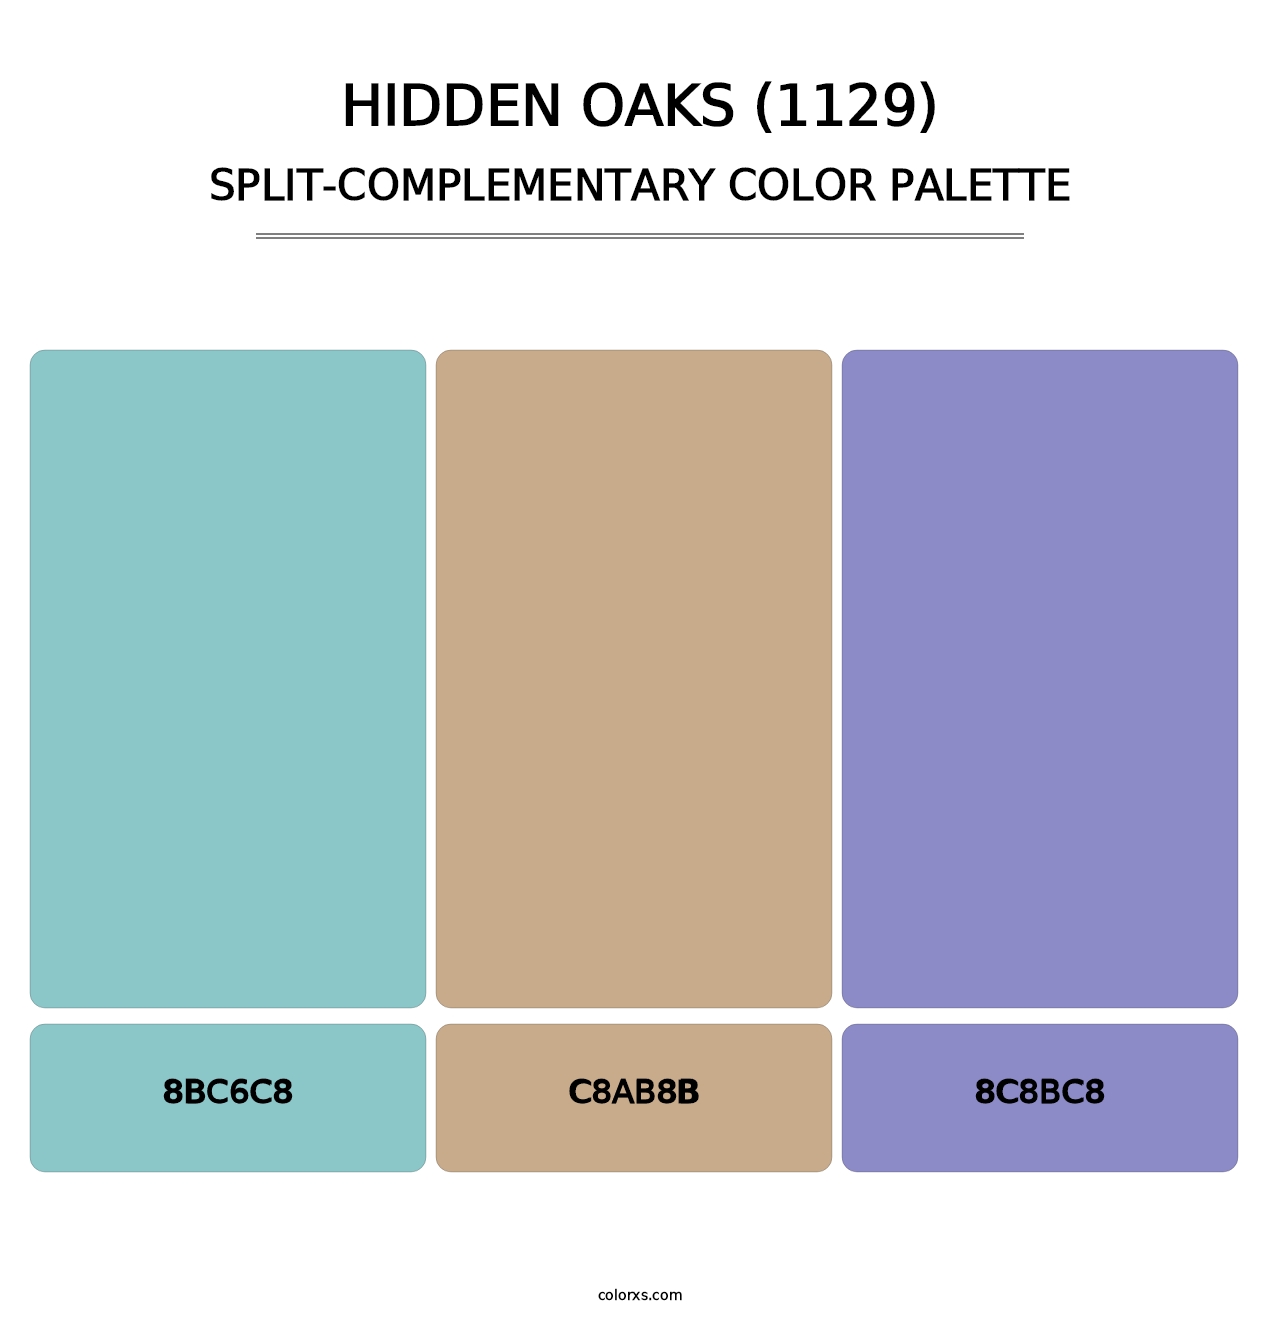 Hidden Oaks (1129) - Split-Complementary Color Palette